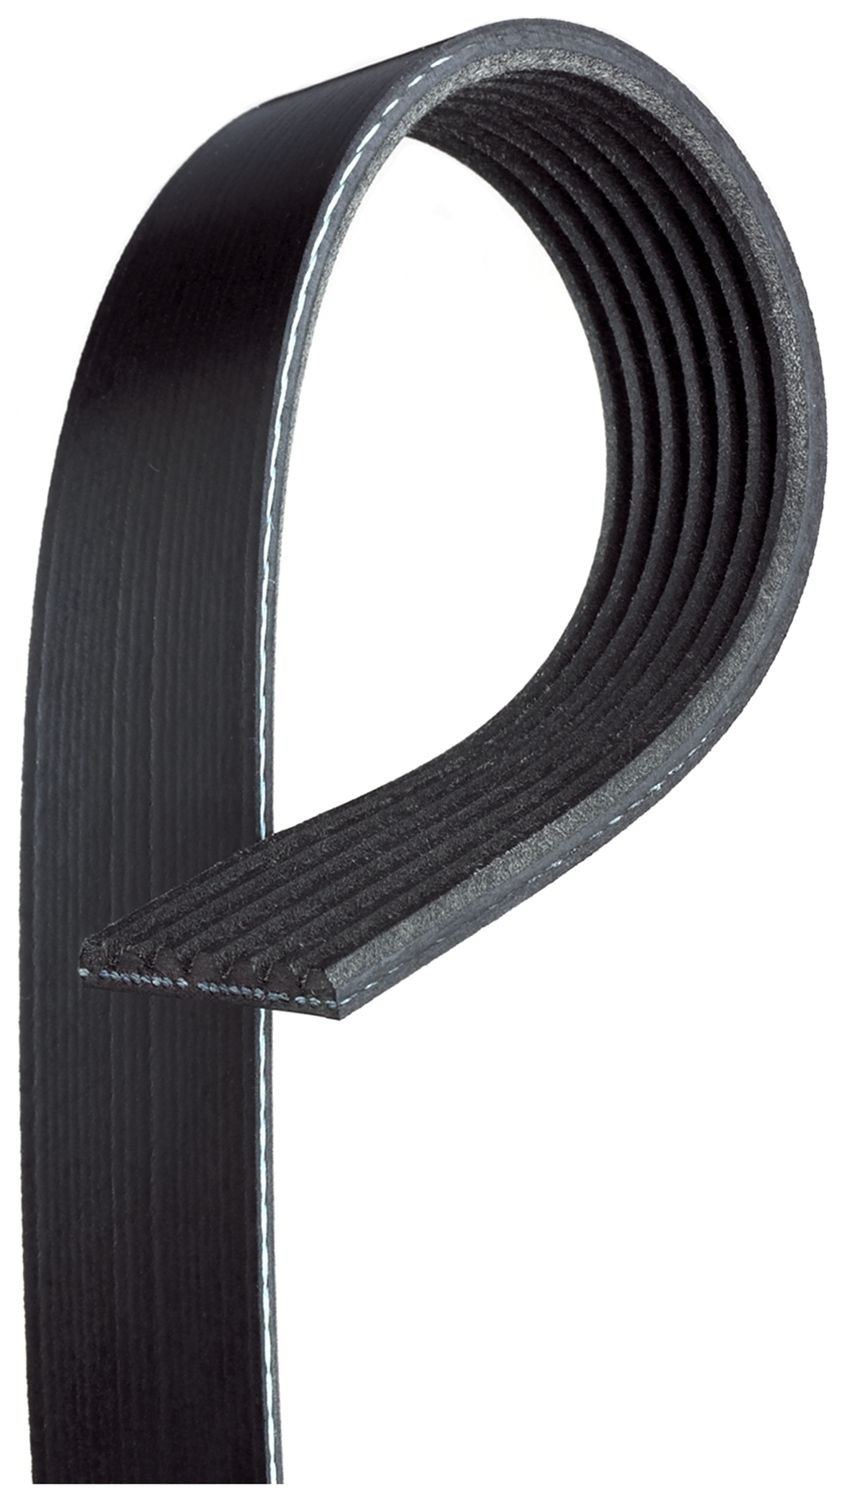 GATES 7PK1260 Serpentine belt 1260mm, 7, G-Force™ C12™ CVT Belt